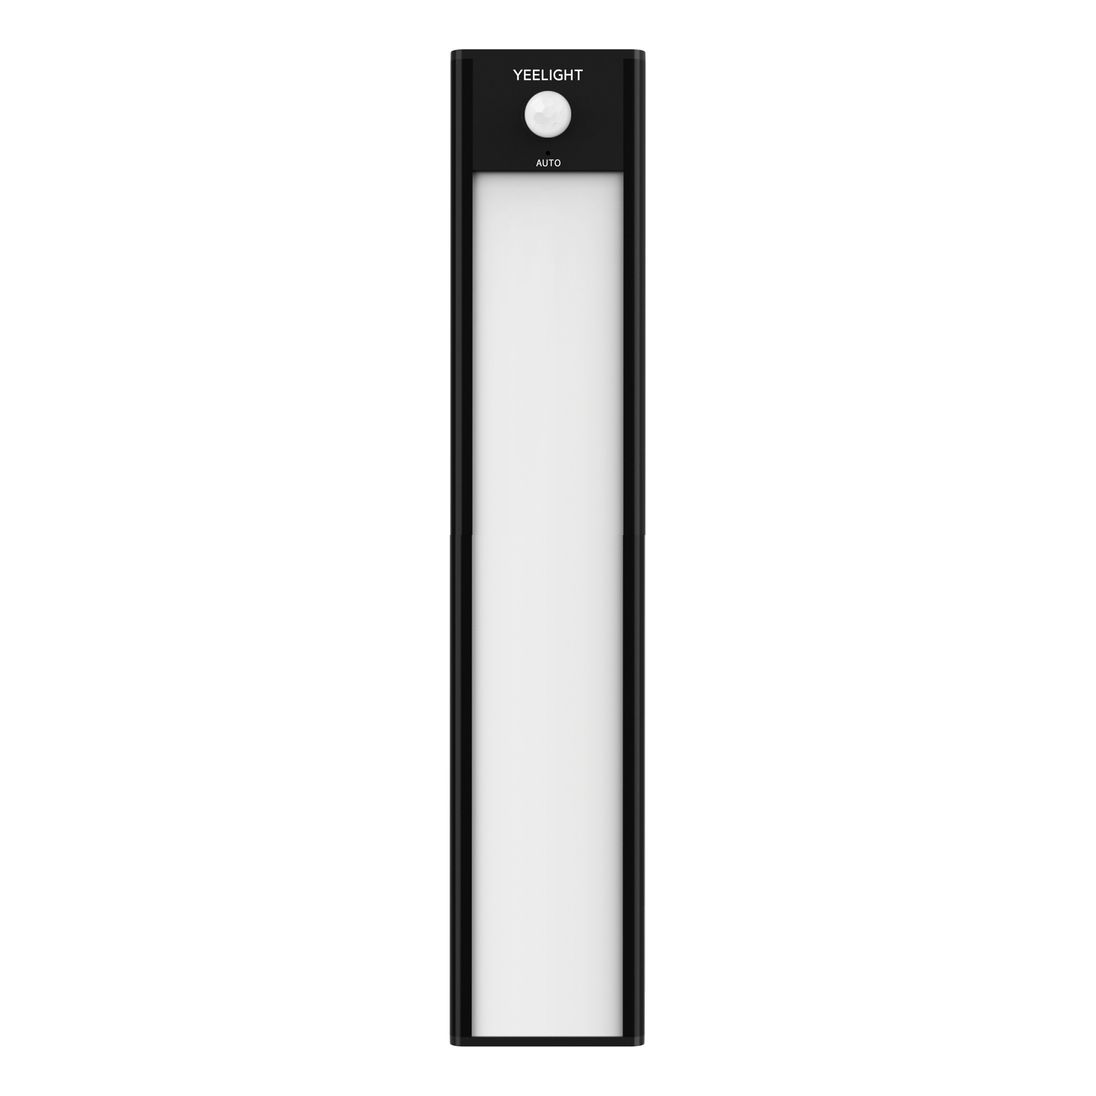 Xiaomi Yeelight Motion Sensor Closet Light A20 - Black